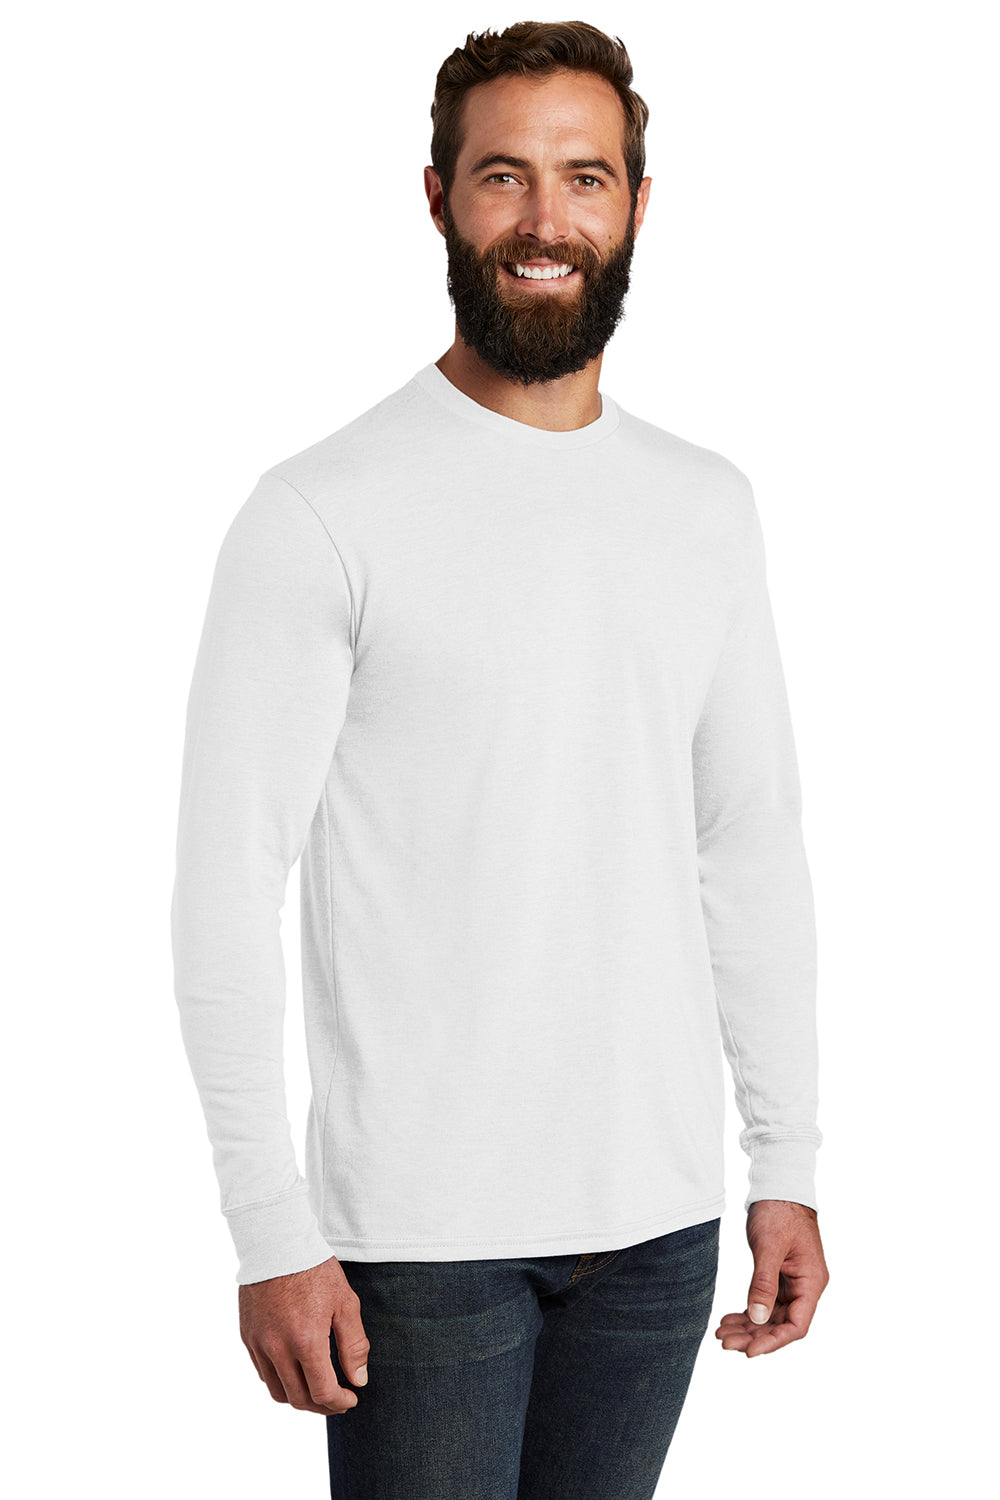 Allmade AL6004 Mens Long Sleeve Crewneck T-Shirt Fairly White Model 3Q